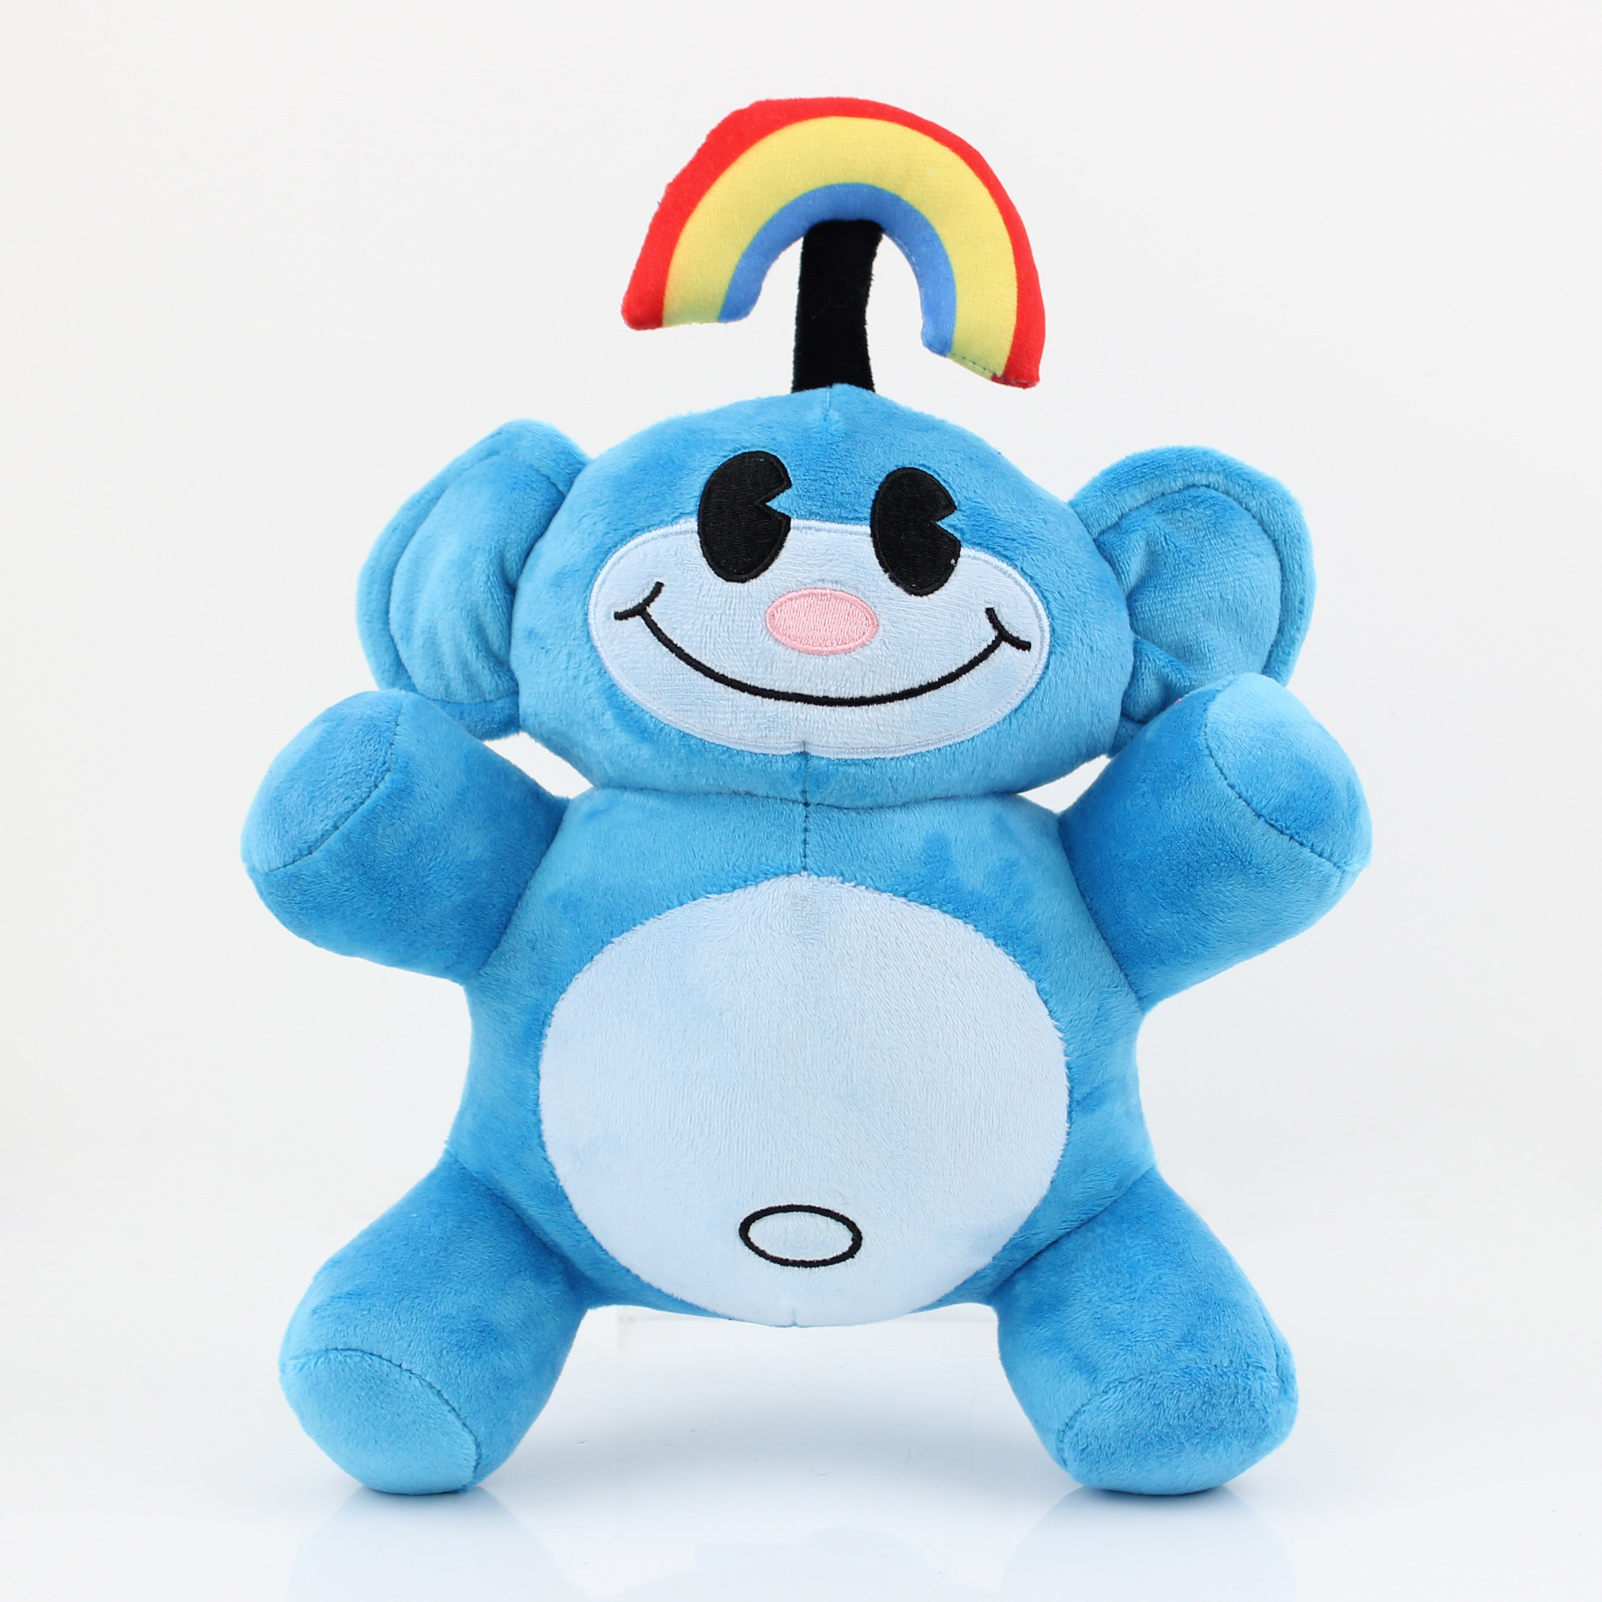 Blue Rainbow Friends Plush Toys, 8.7 inch Plush Pillow, Rainbow